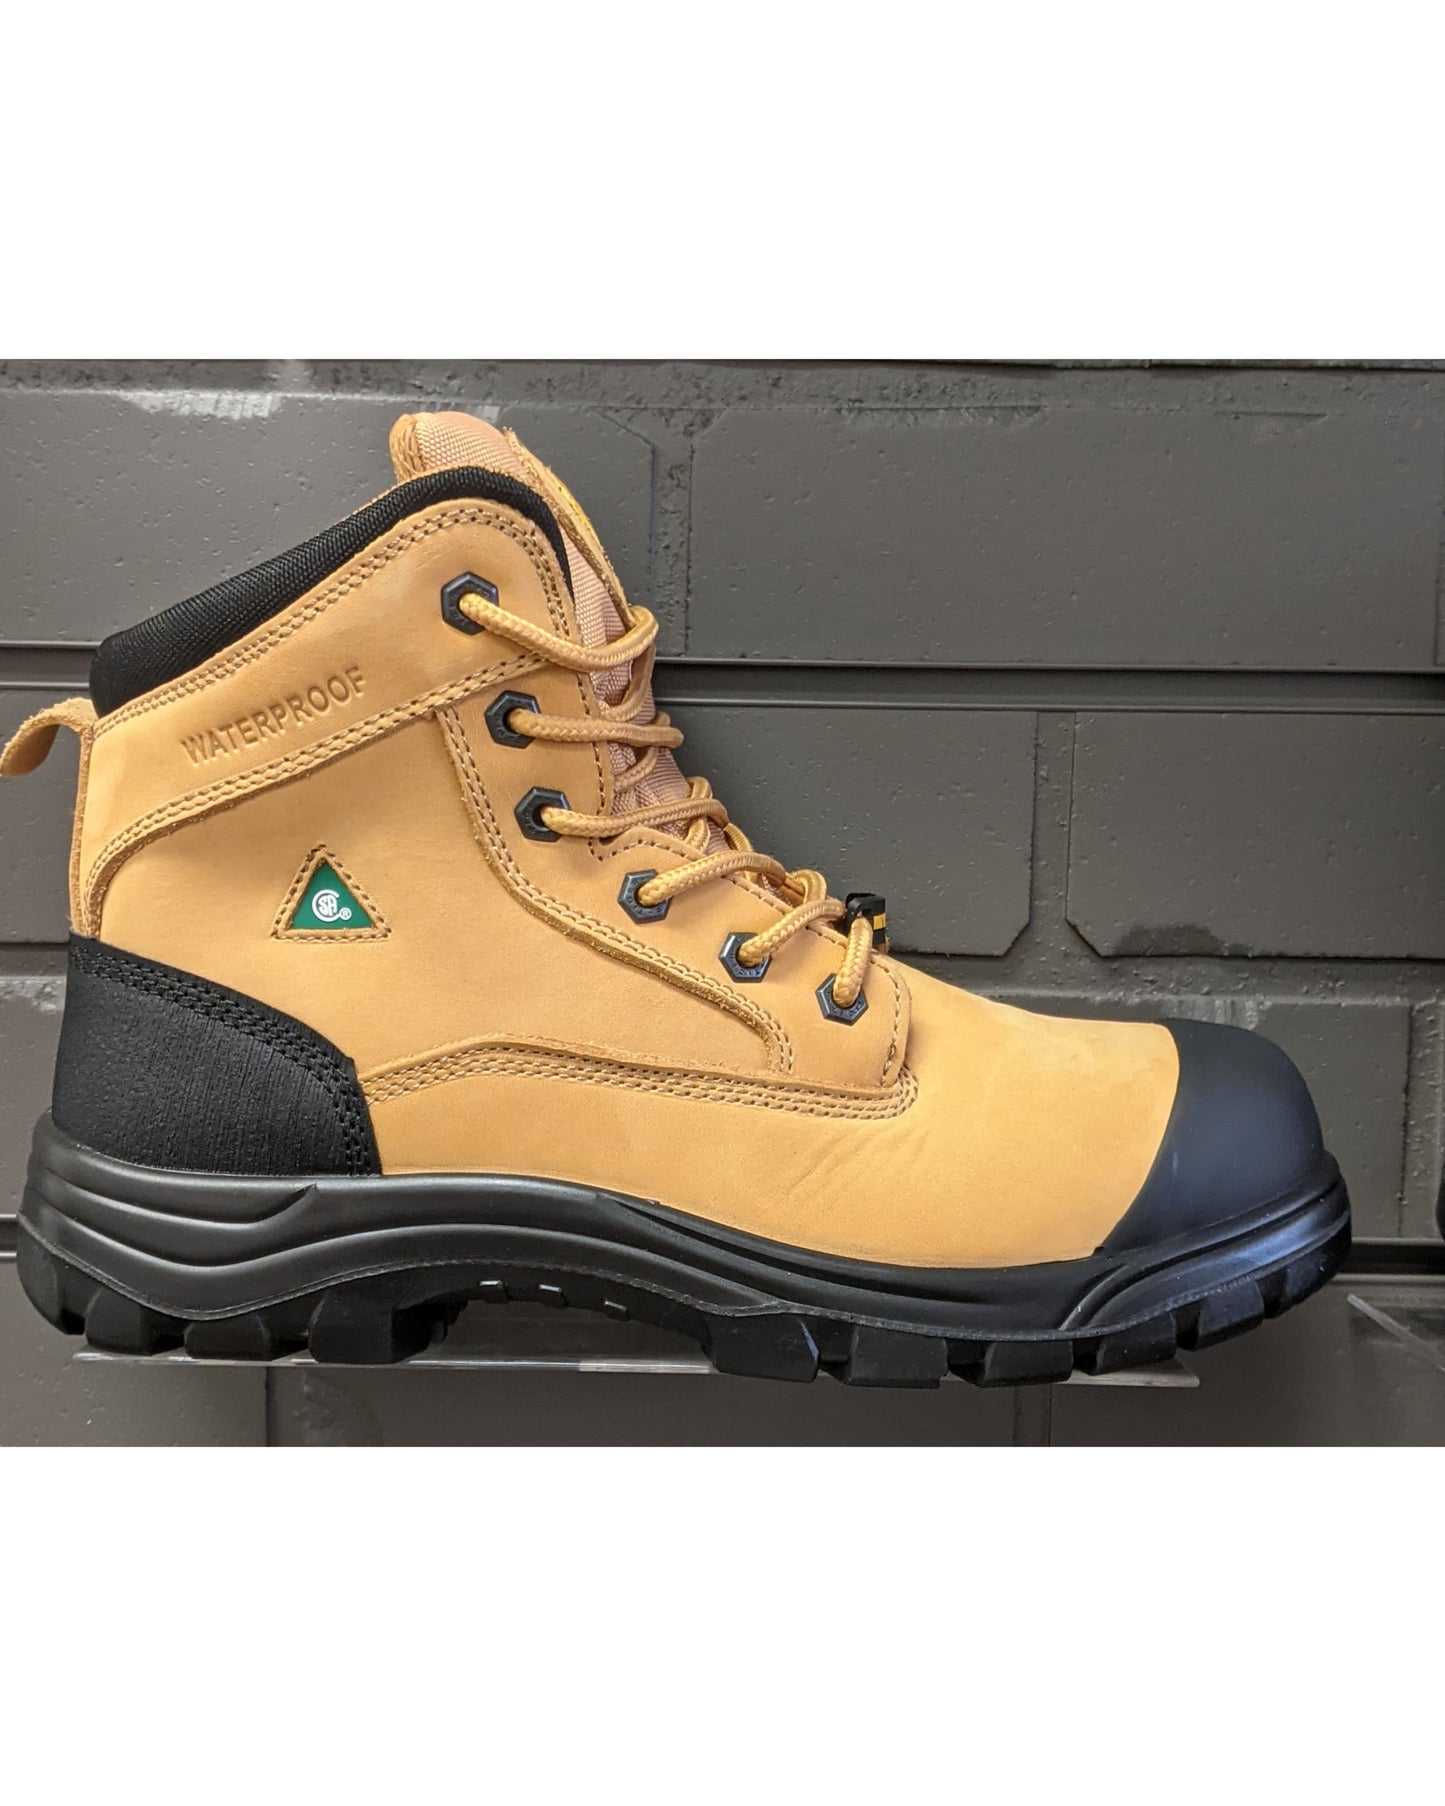 Waterproof Men's Steel Toe Boots - 6" CSA Certified Safety Boot 7666C